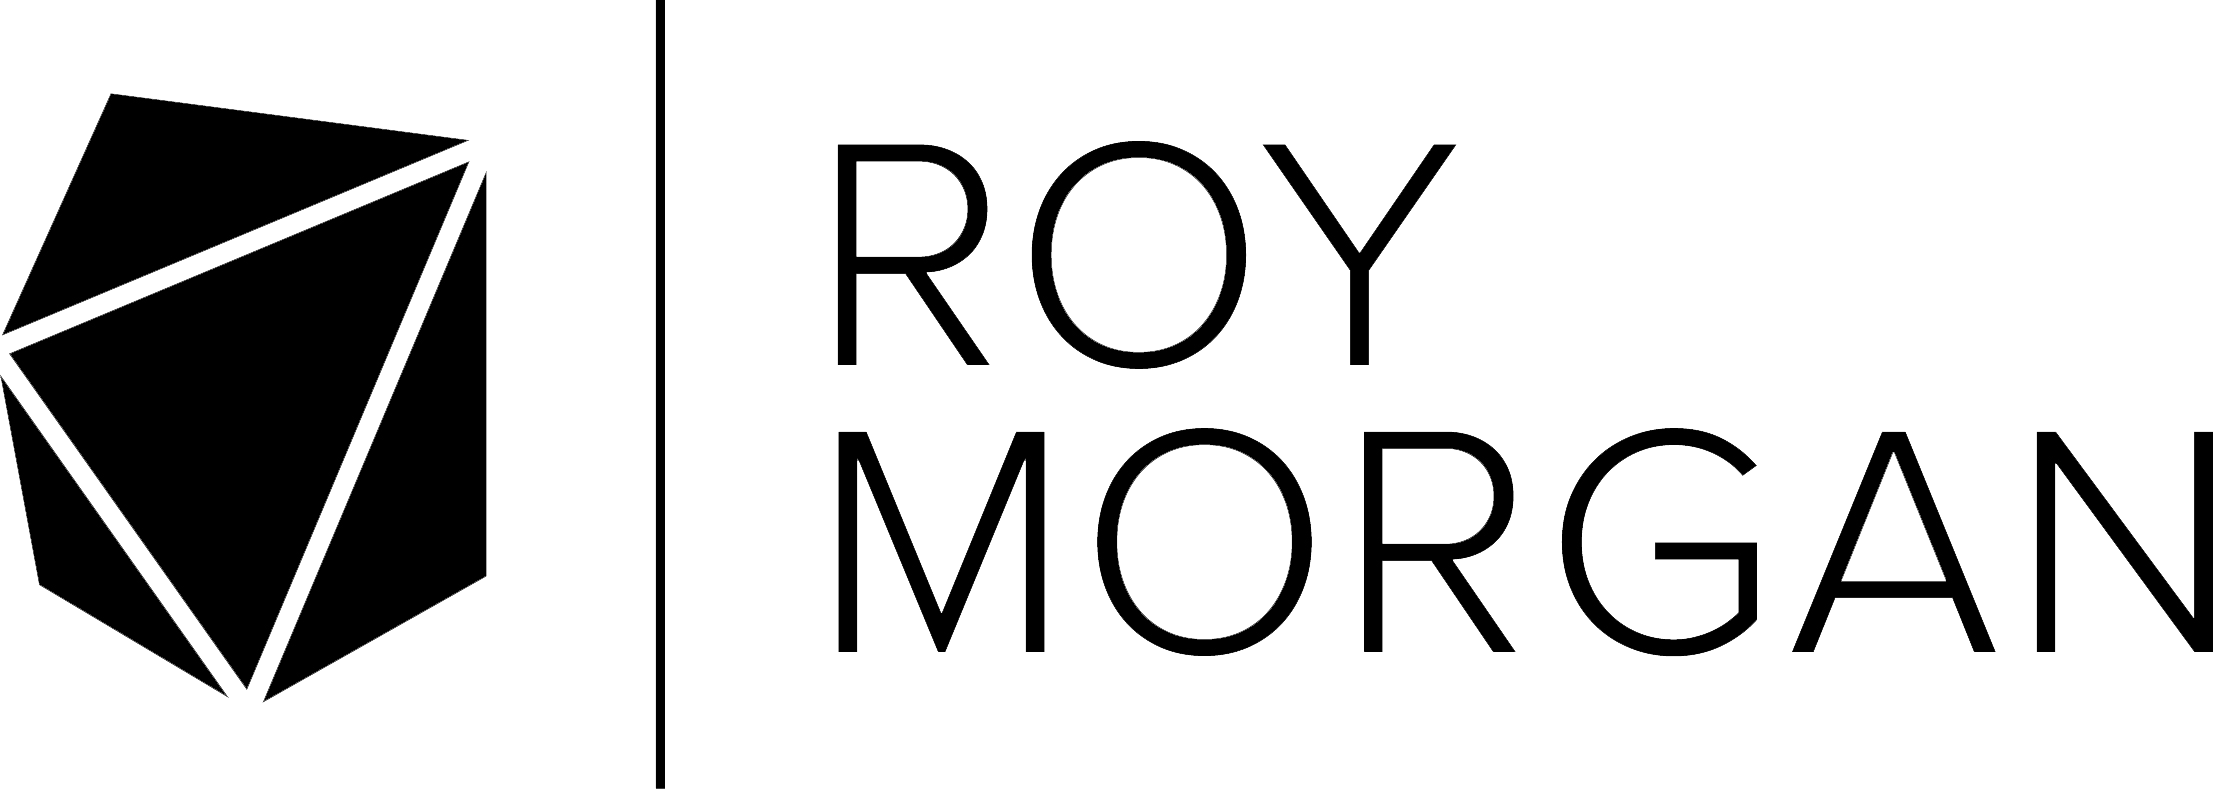 Roy Morgan Logo